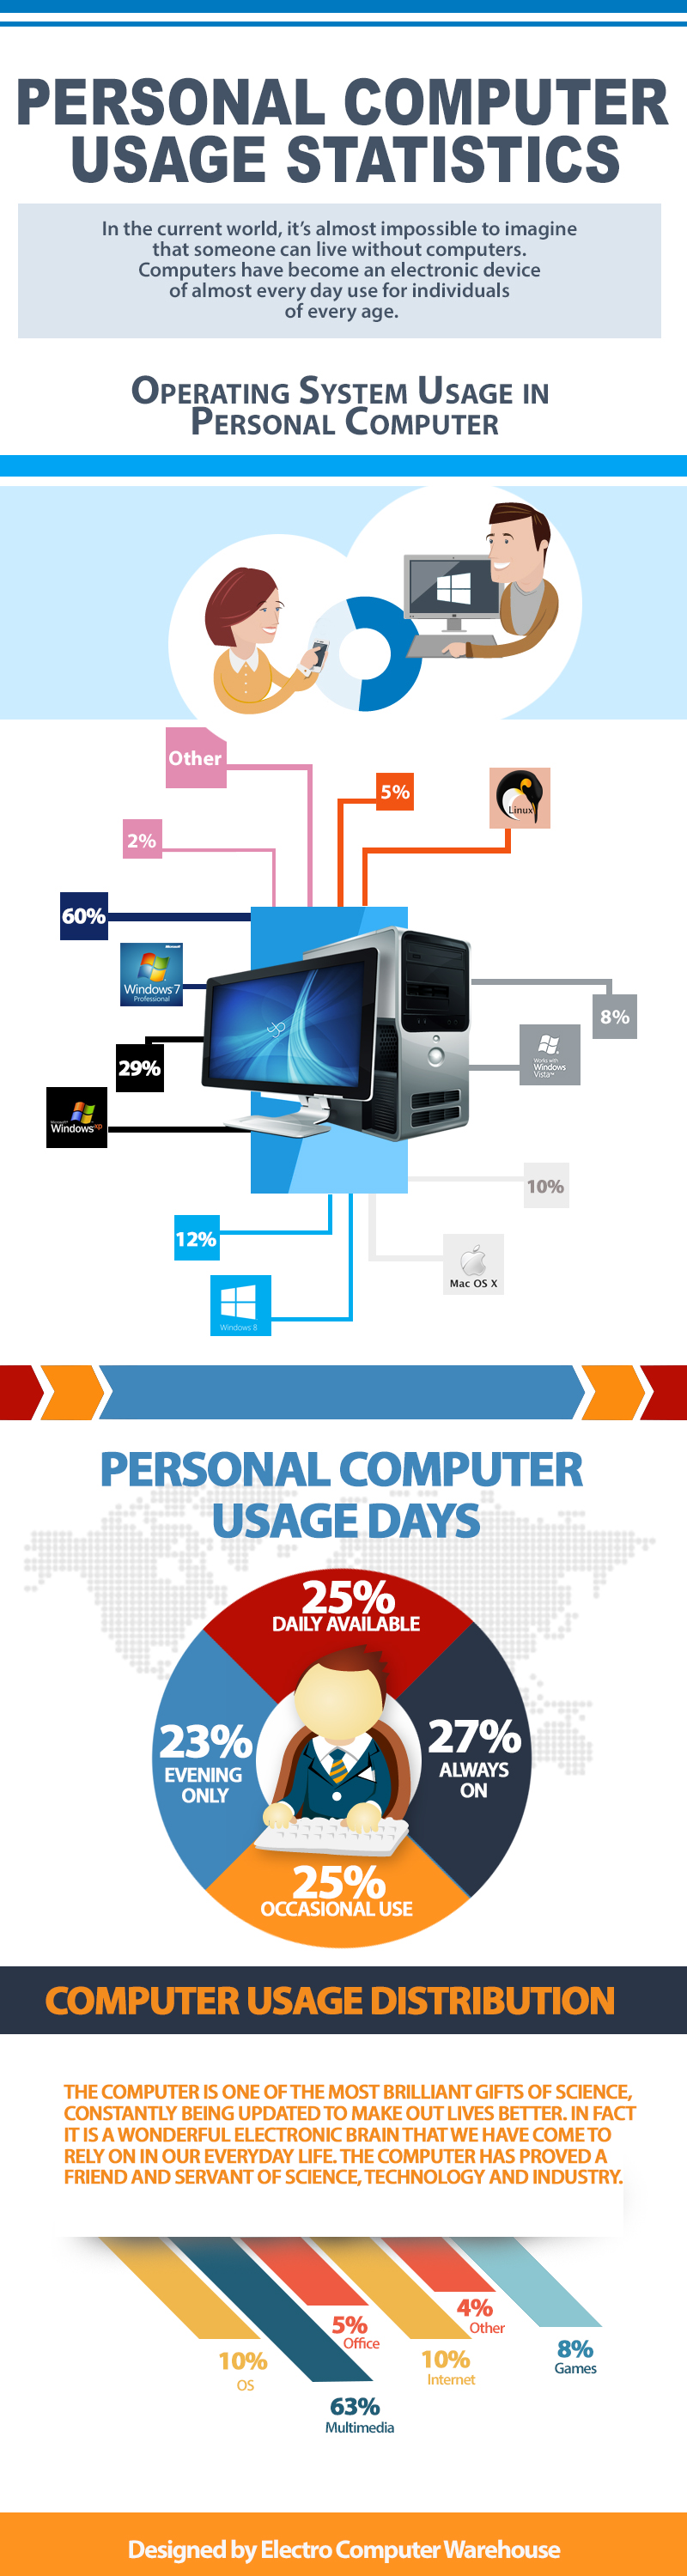 Personal computer usage statistics